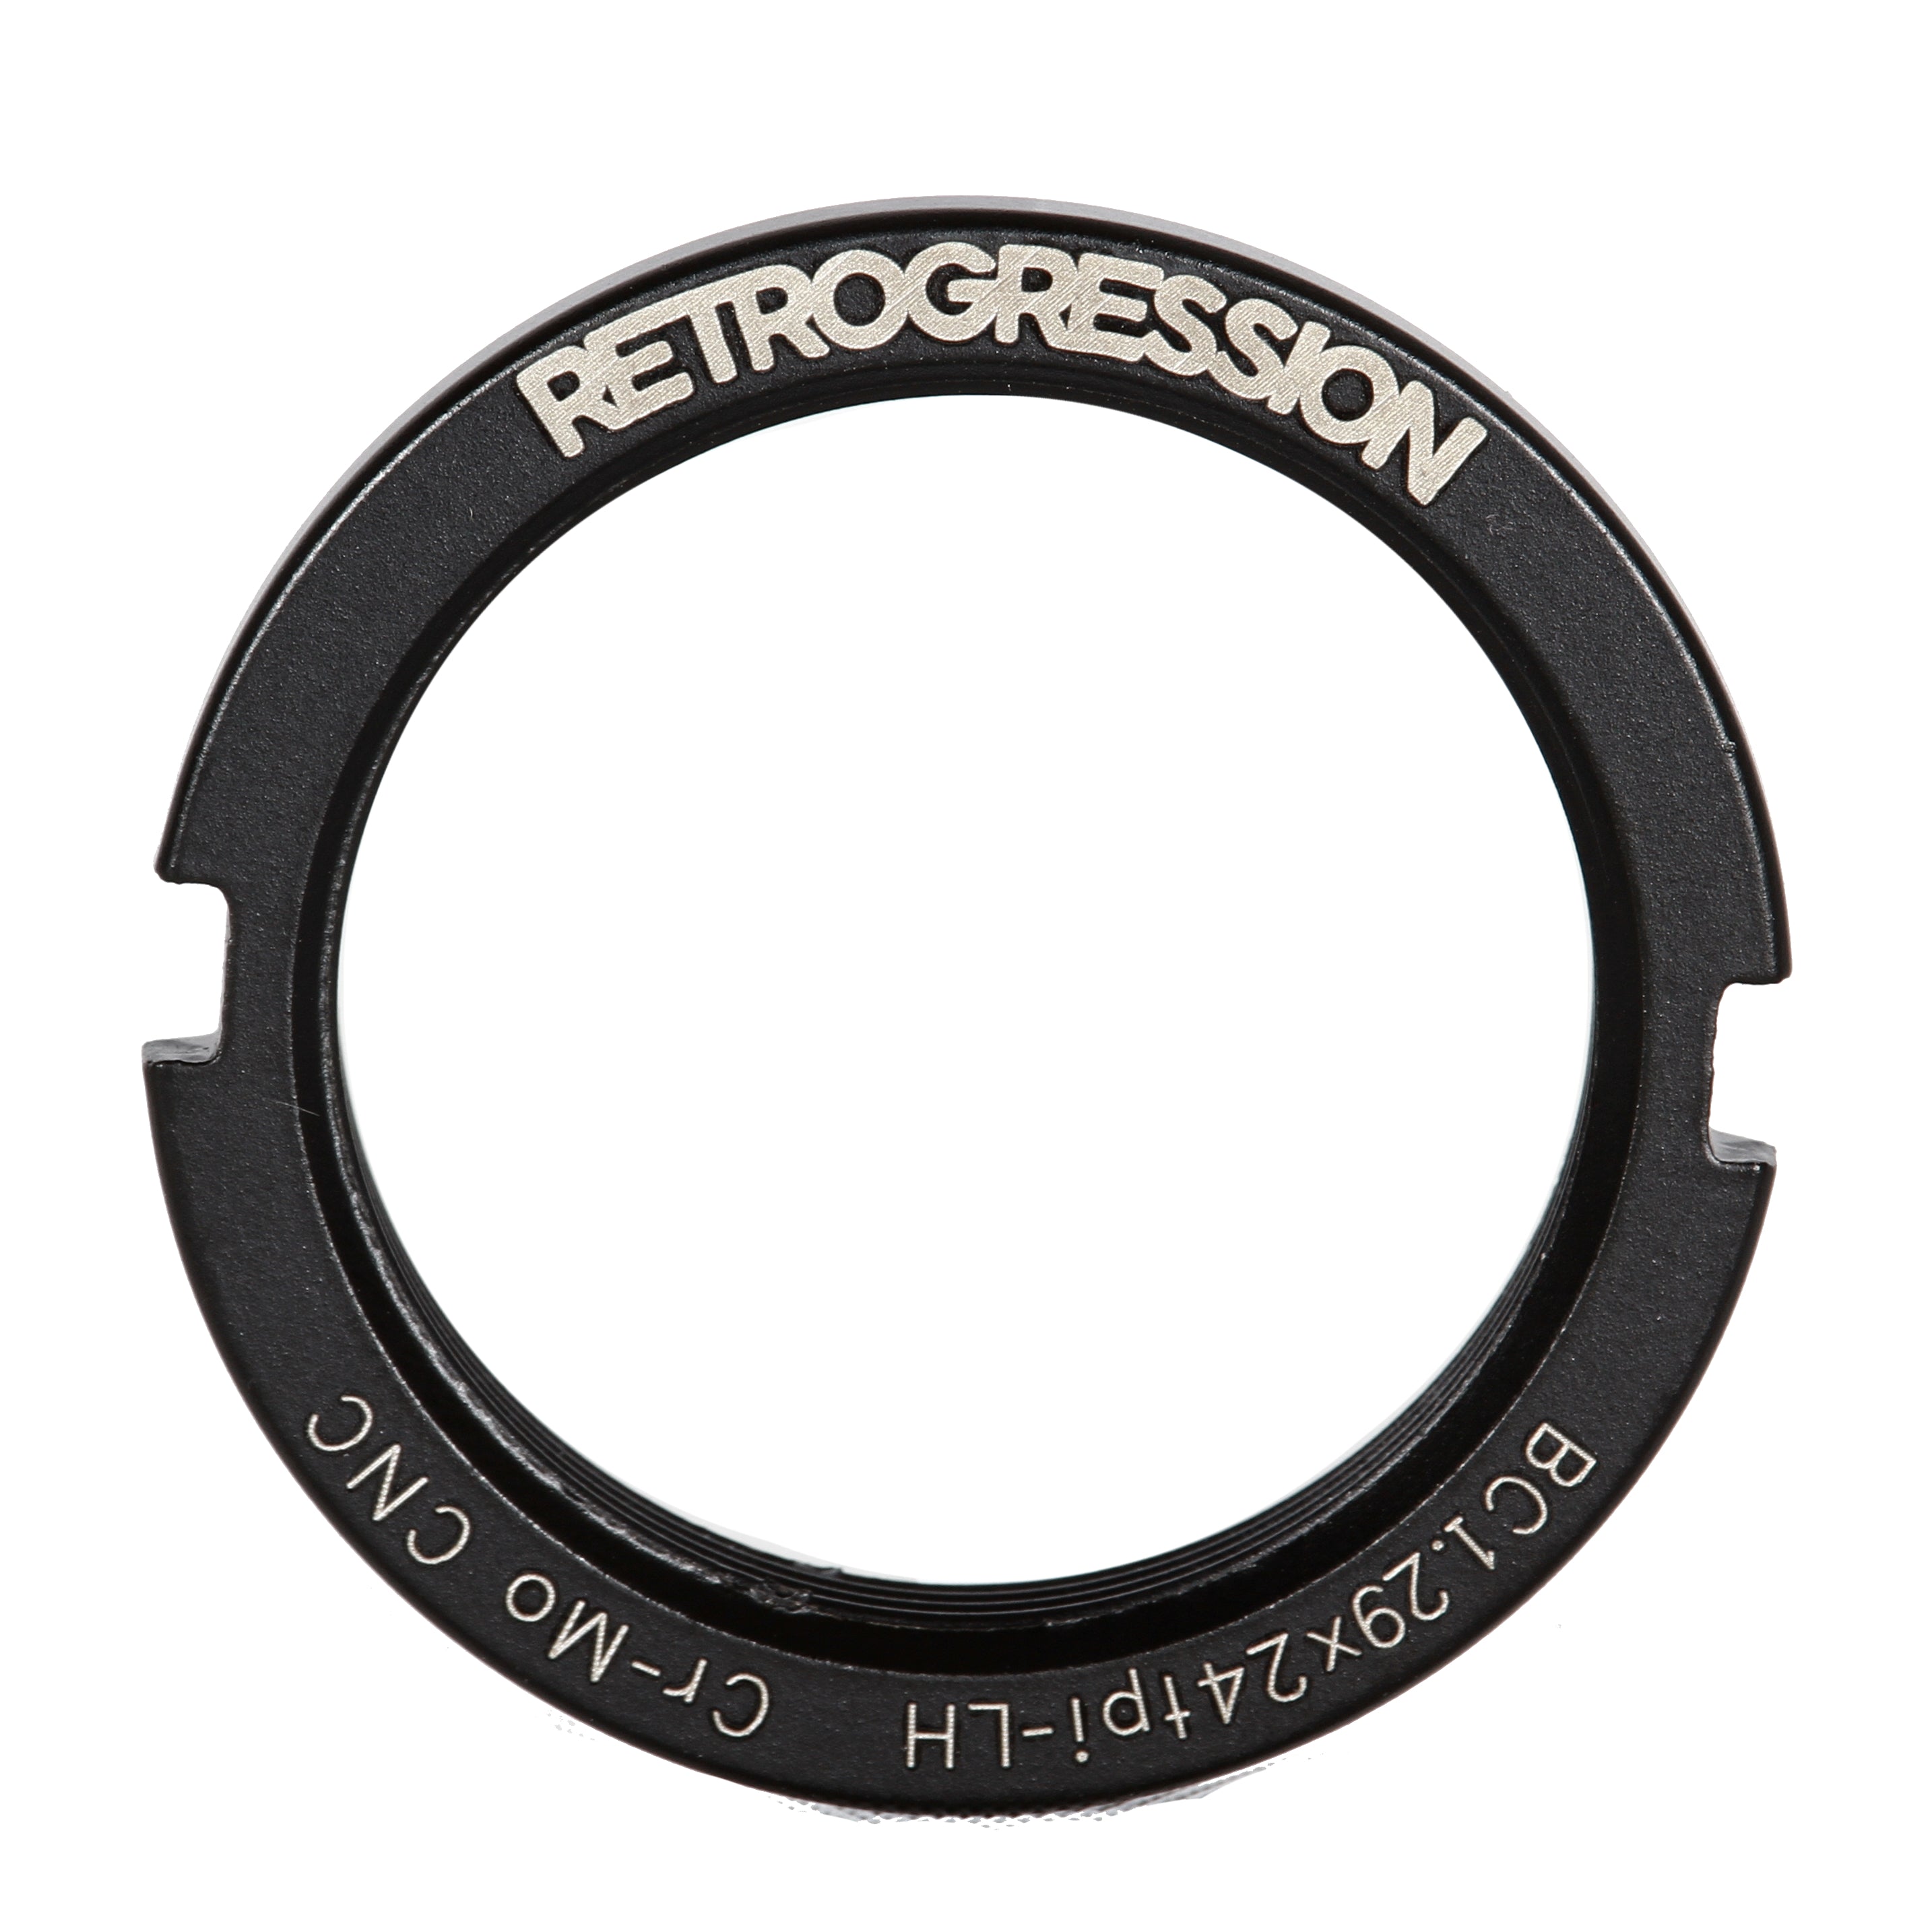 Retrogression cro-mo track lockring - Retrogression Fixed Gear